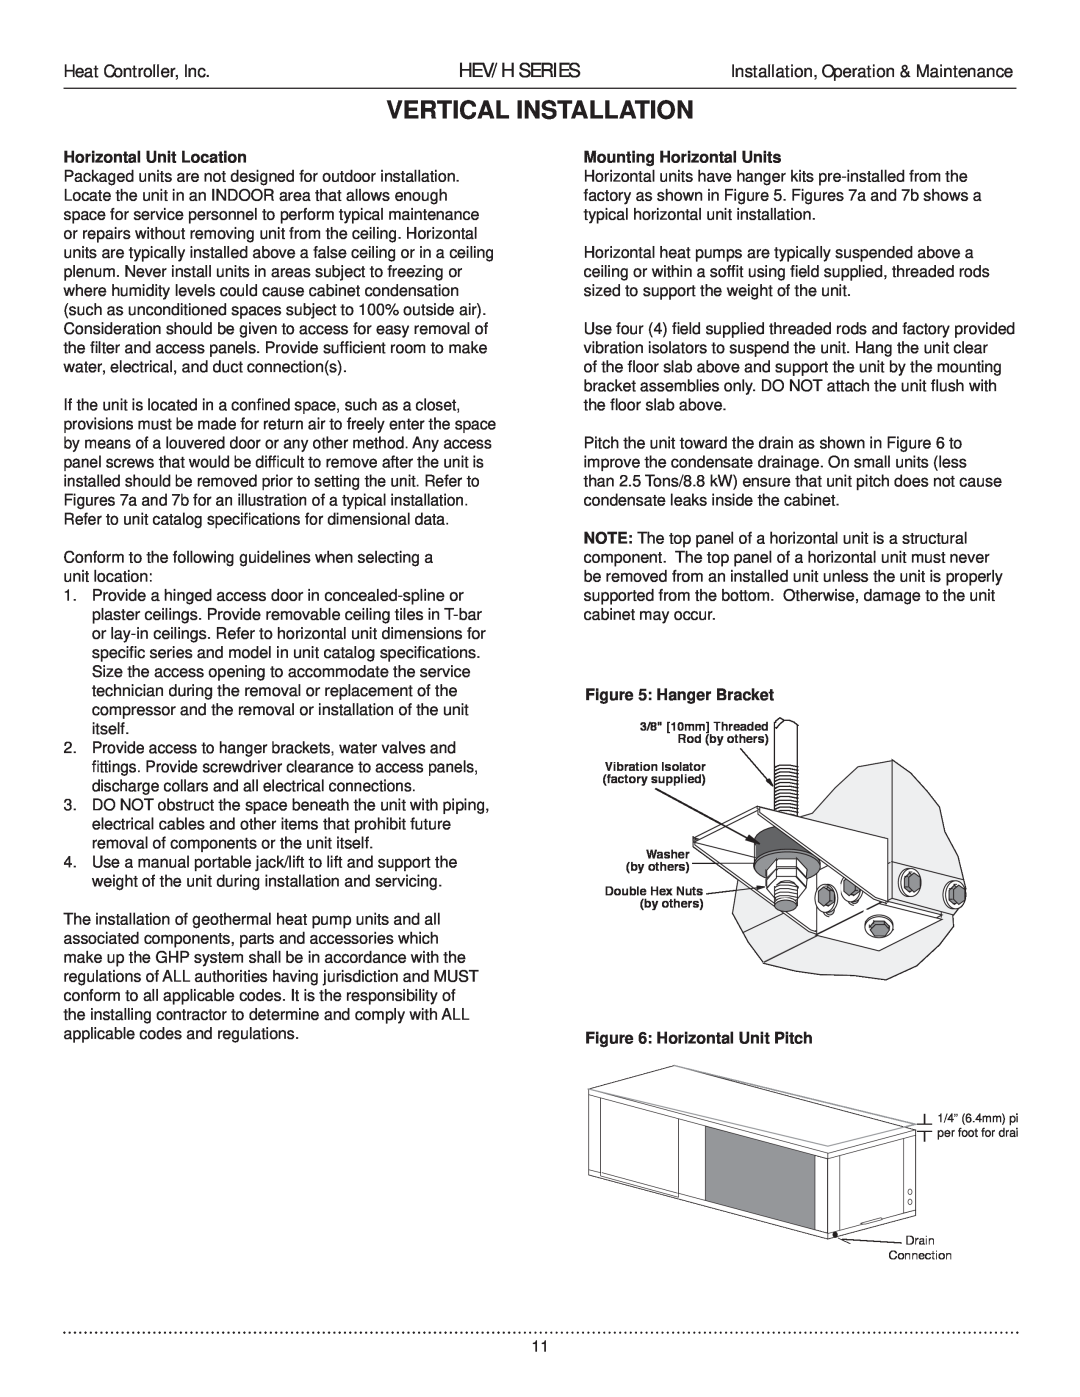 Heat Controller HEV/H Vertical Installation, Hev/H Series, Heat Controller, Inc, Installation, Operation & Maintenance 